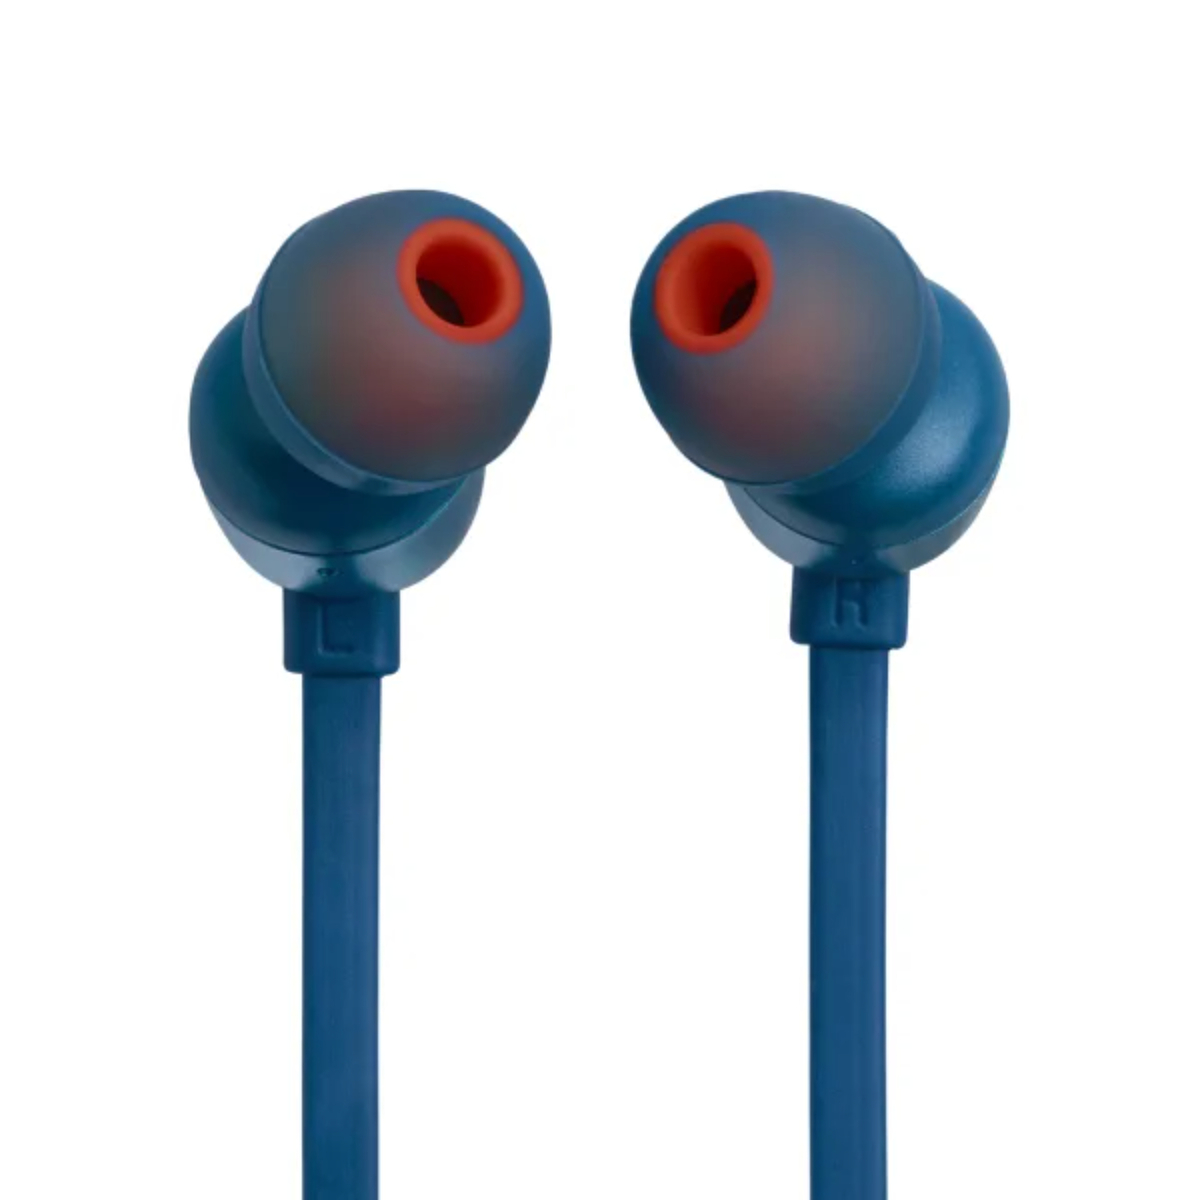 JBL TUNE 310C Wired Hi-Res In-Ear Headphones, Blue, JBLT310CBLU